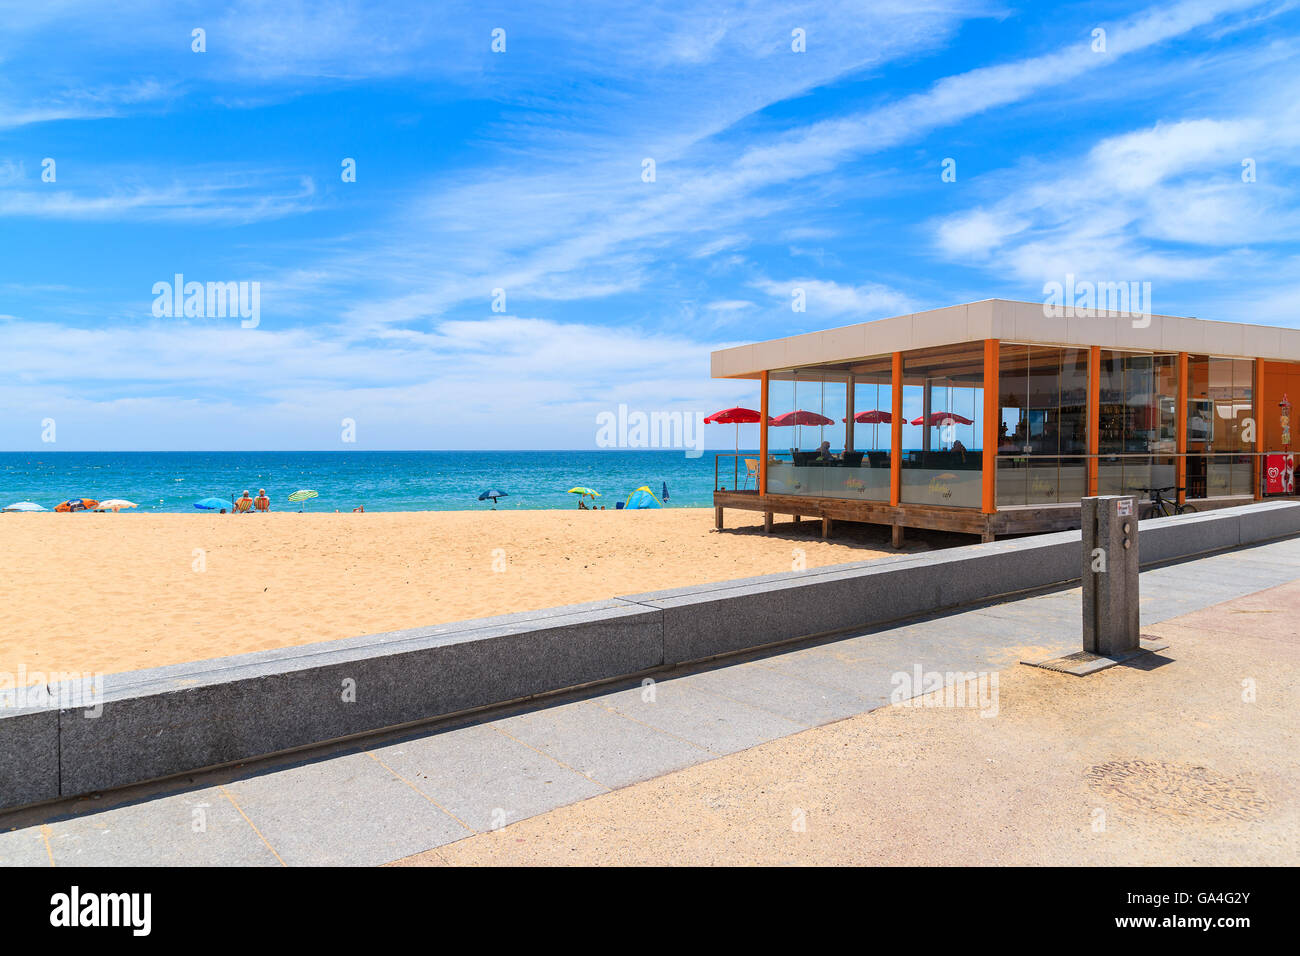 ARMACAO DE PERA BEACH, PORTUGAL - 17. Mai 2015: Restaurant am Strand von Armacao de Pera in Algarve-Region das beliebteste Urlaubsziel in Portugal ist. Stockfoto